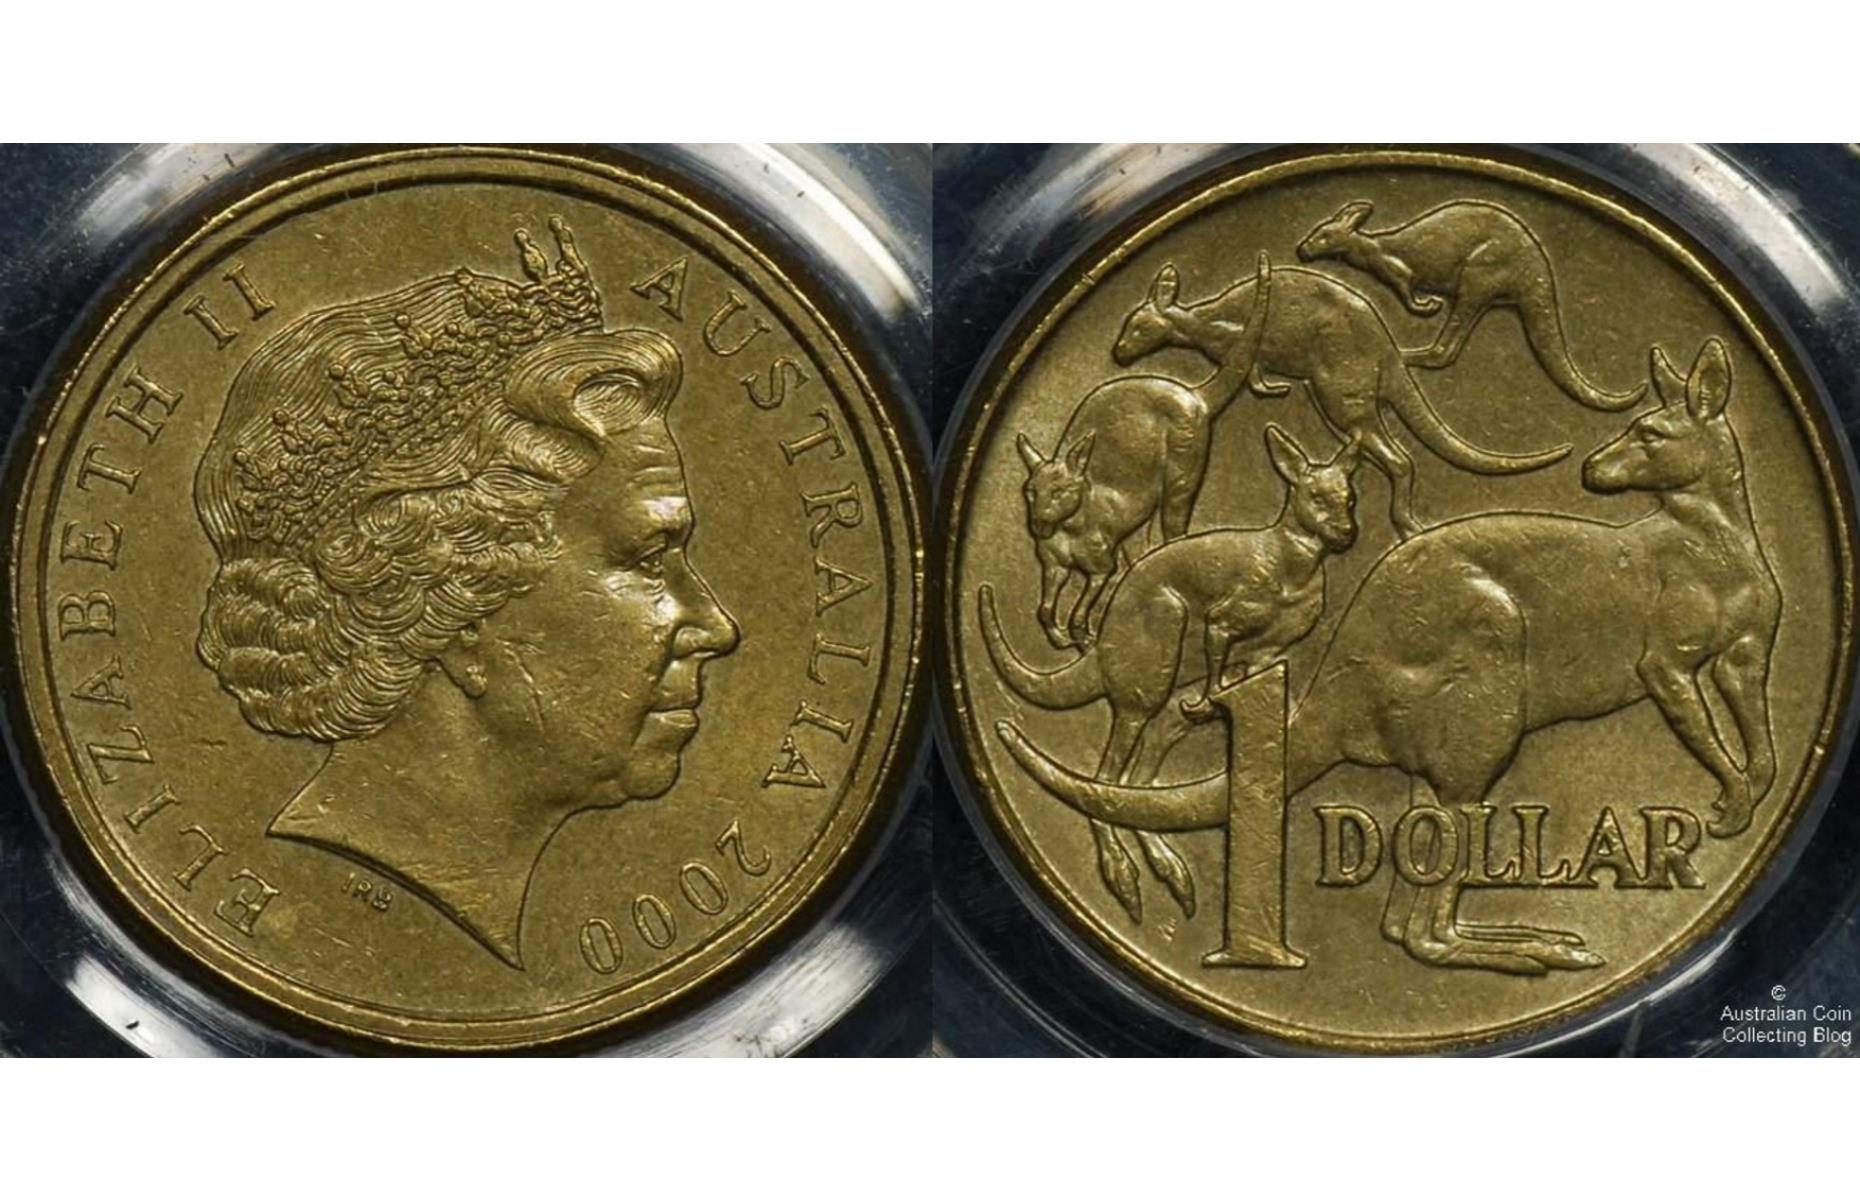 2000 Australia $1 coin with double rim